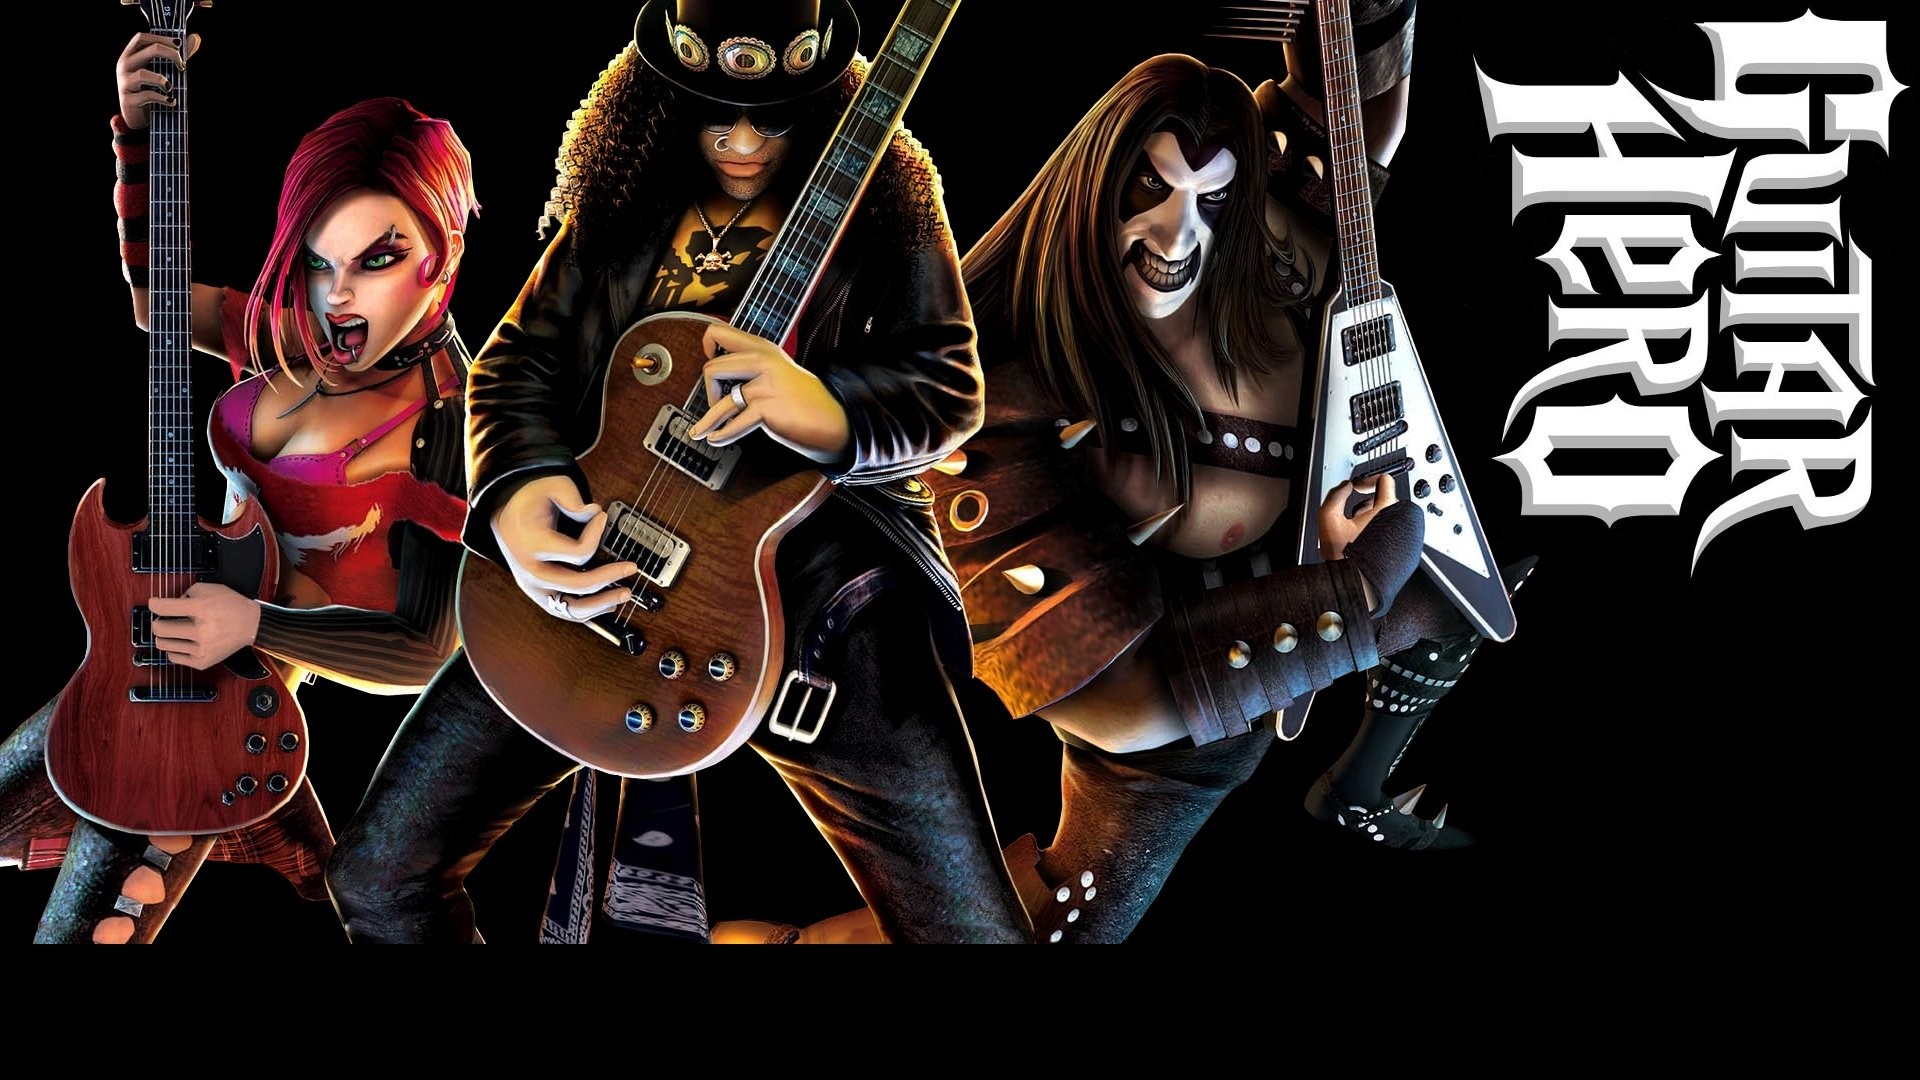 1920x1080 GUITAR HERO music guitars heavy metal rock hard 1ghero rhythm guitarhero  poster slash guns roses wallpaper |  | 644760 | WallpaperUP